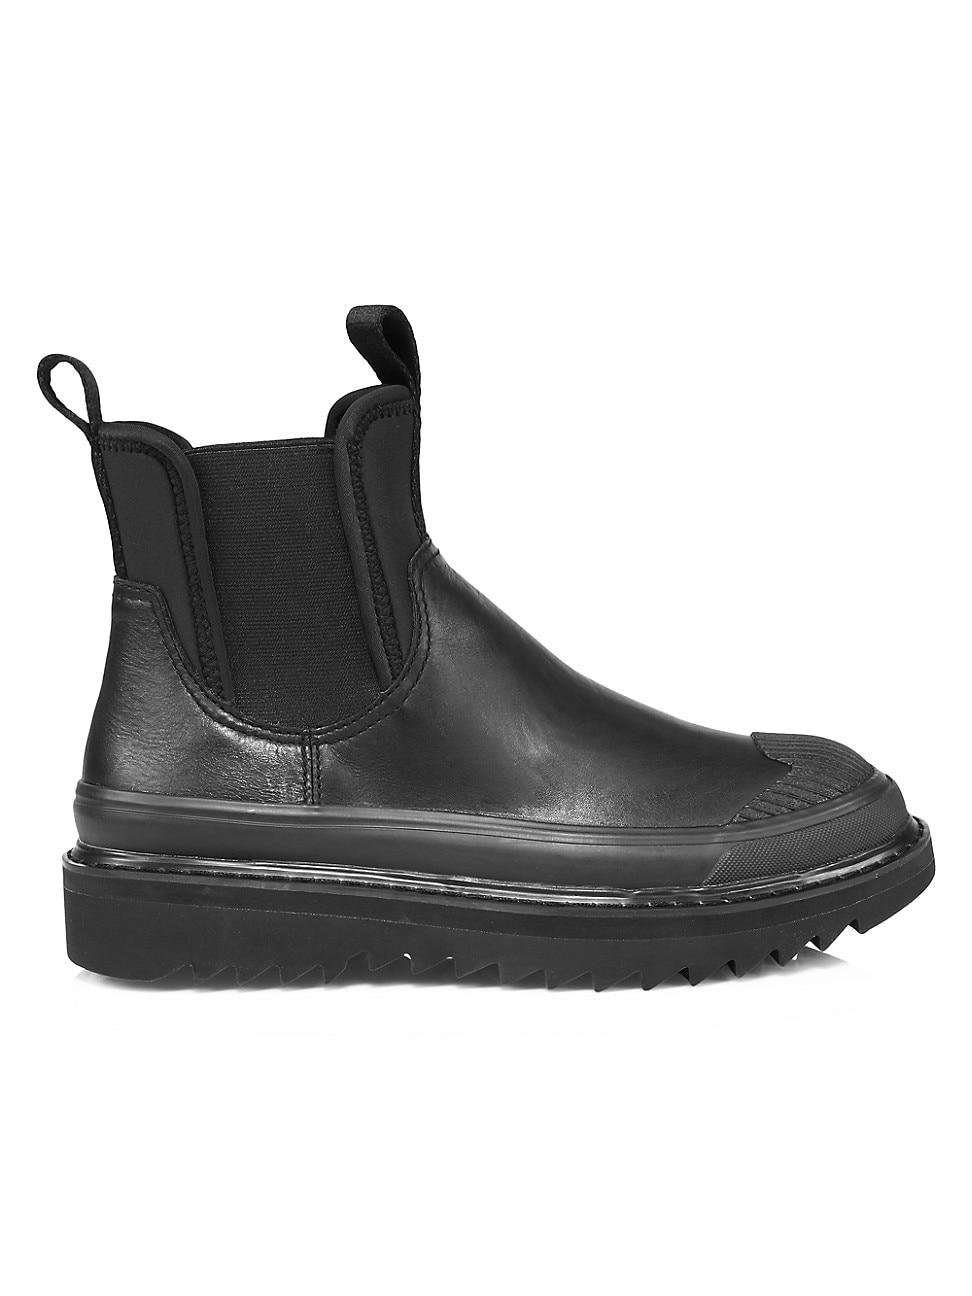 DIESEL Rubber Chelsea Boots in Black for Men - Lyst